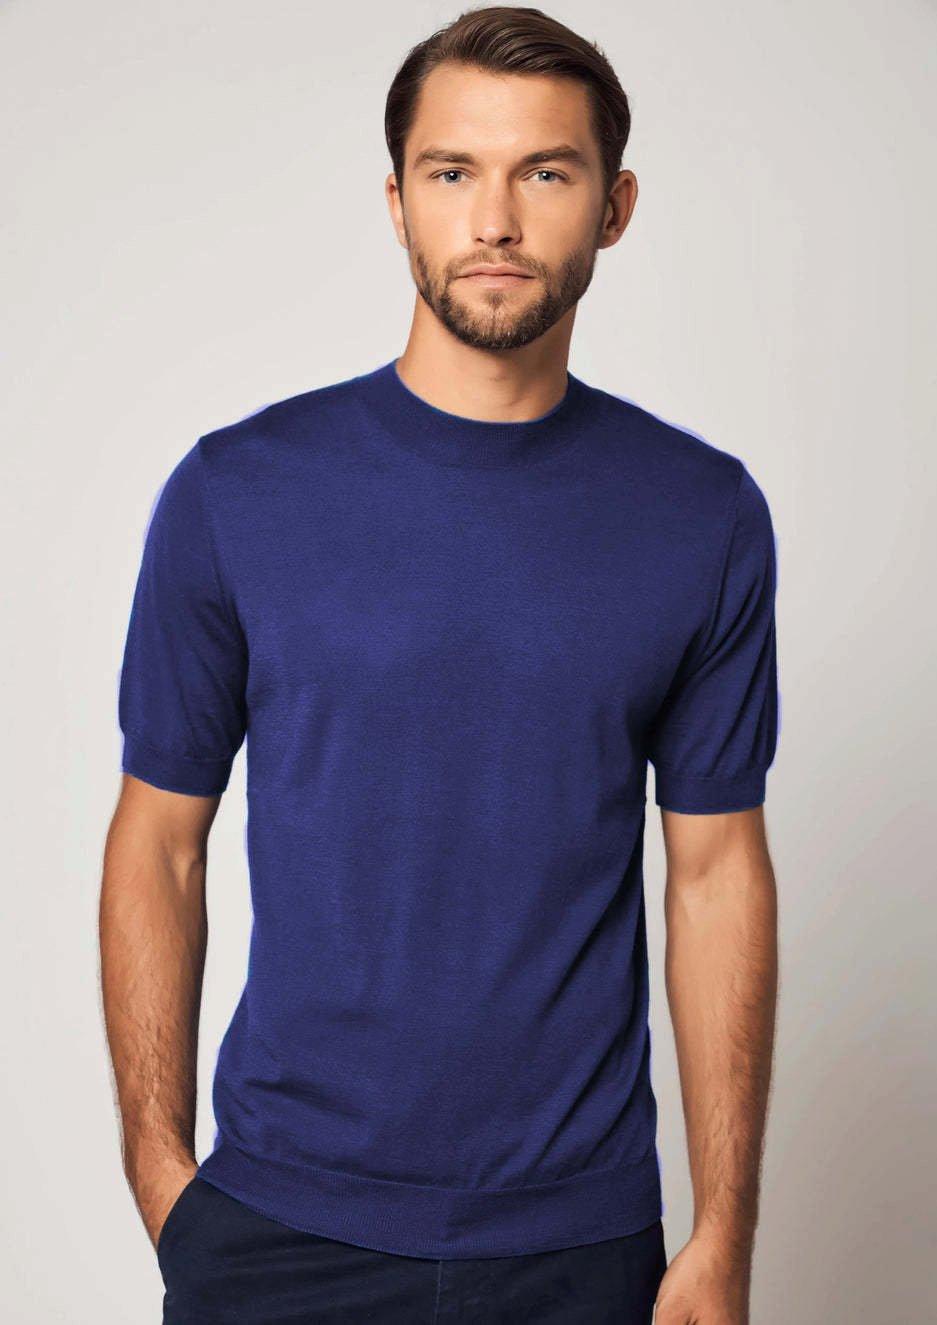 Bellemere New York  T-shirt essenziale in cashmere e seta 